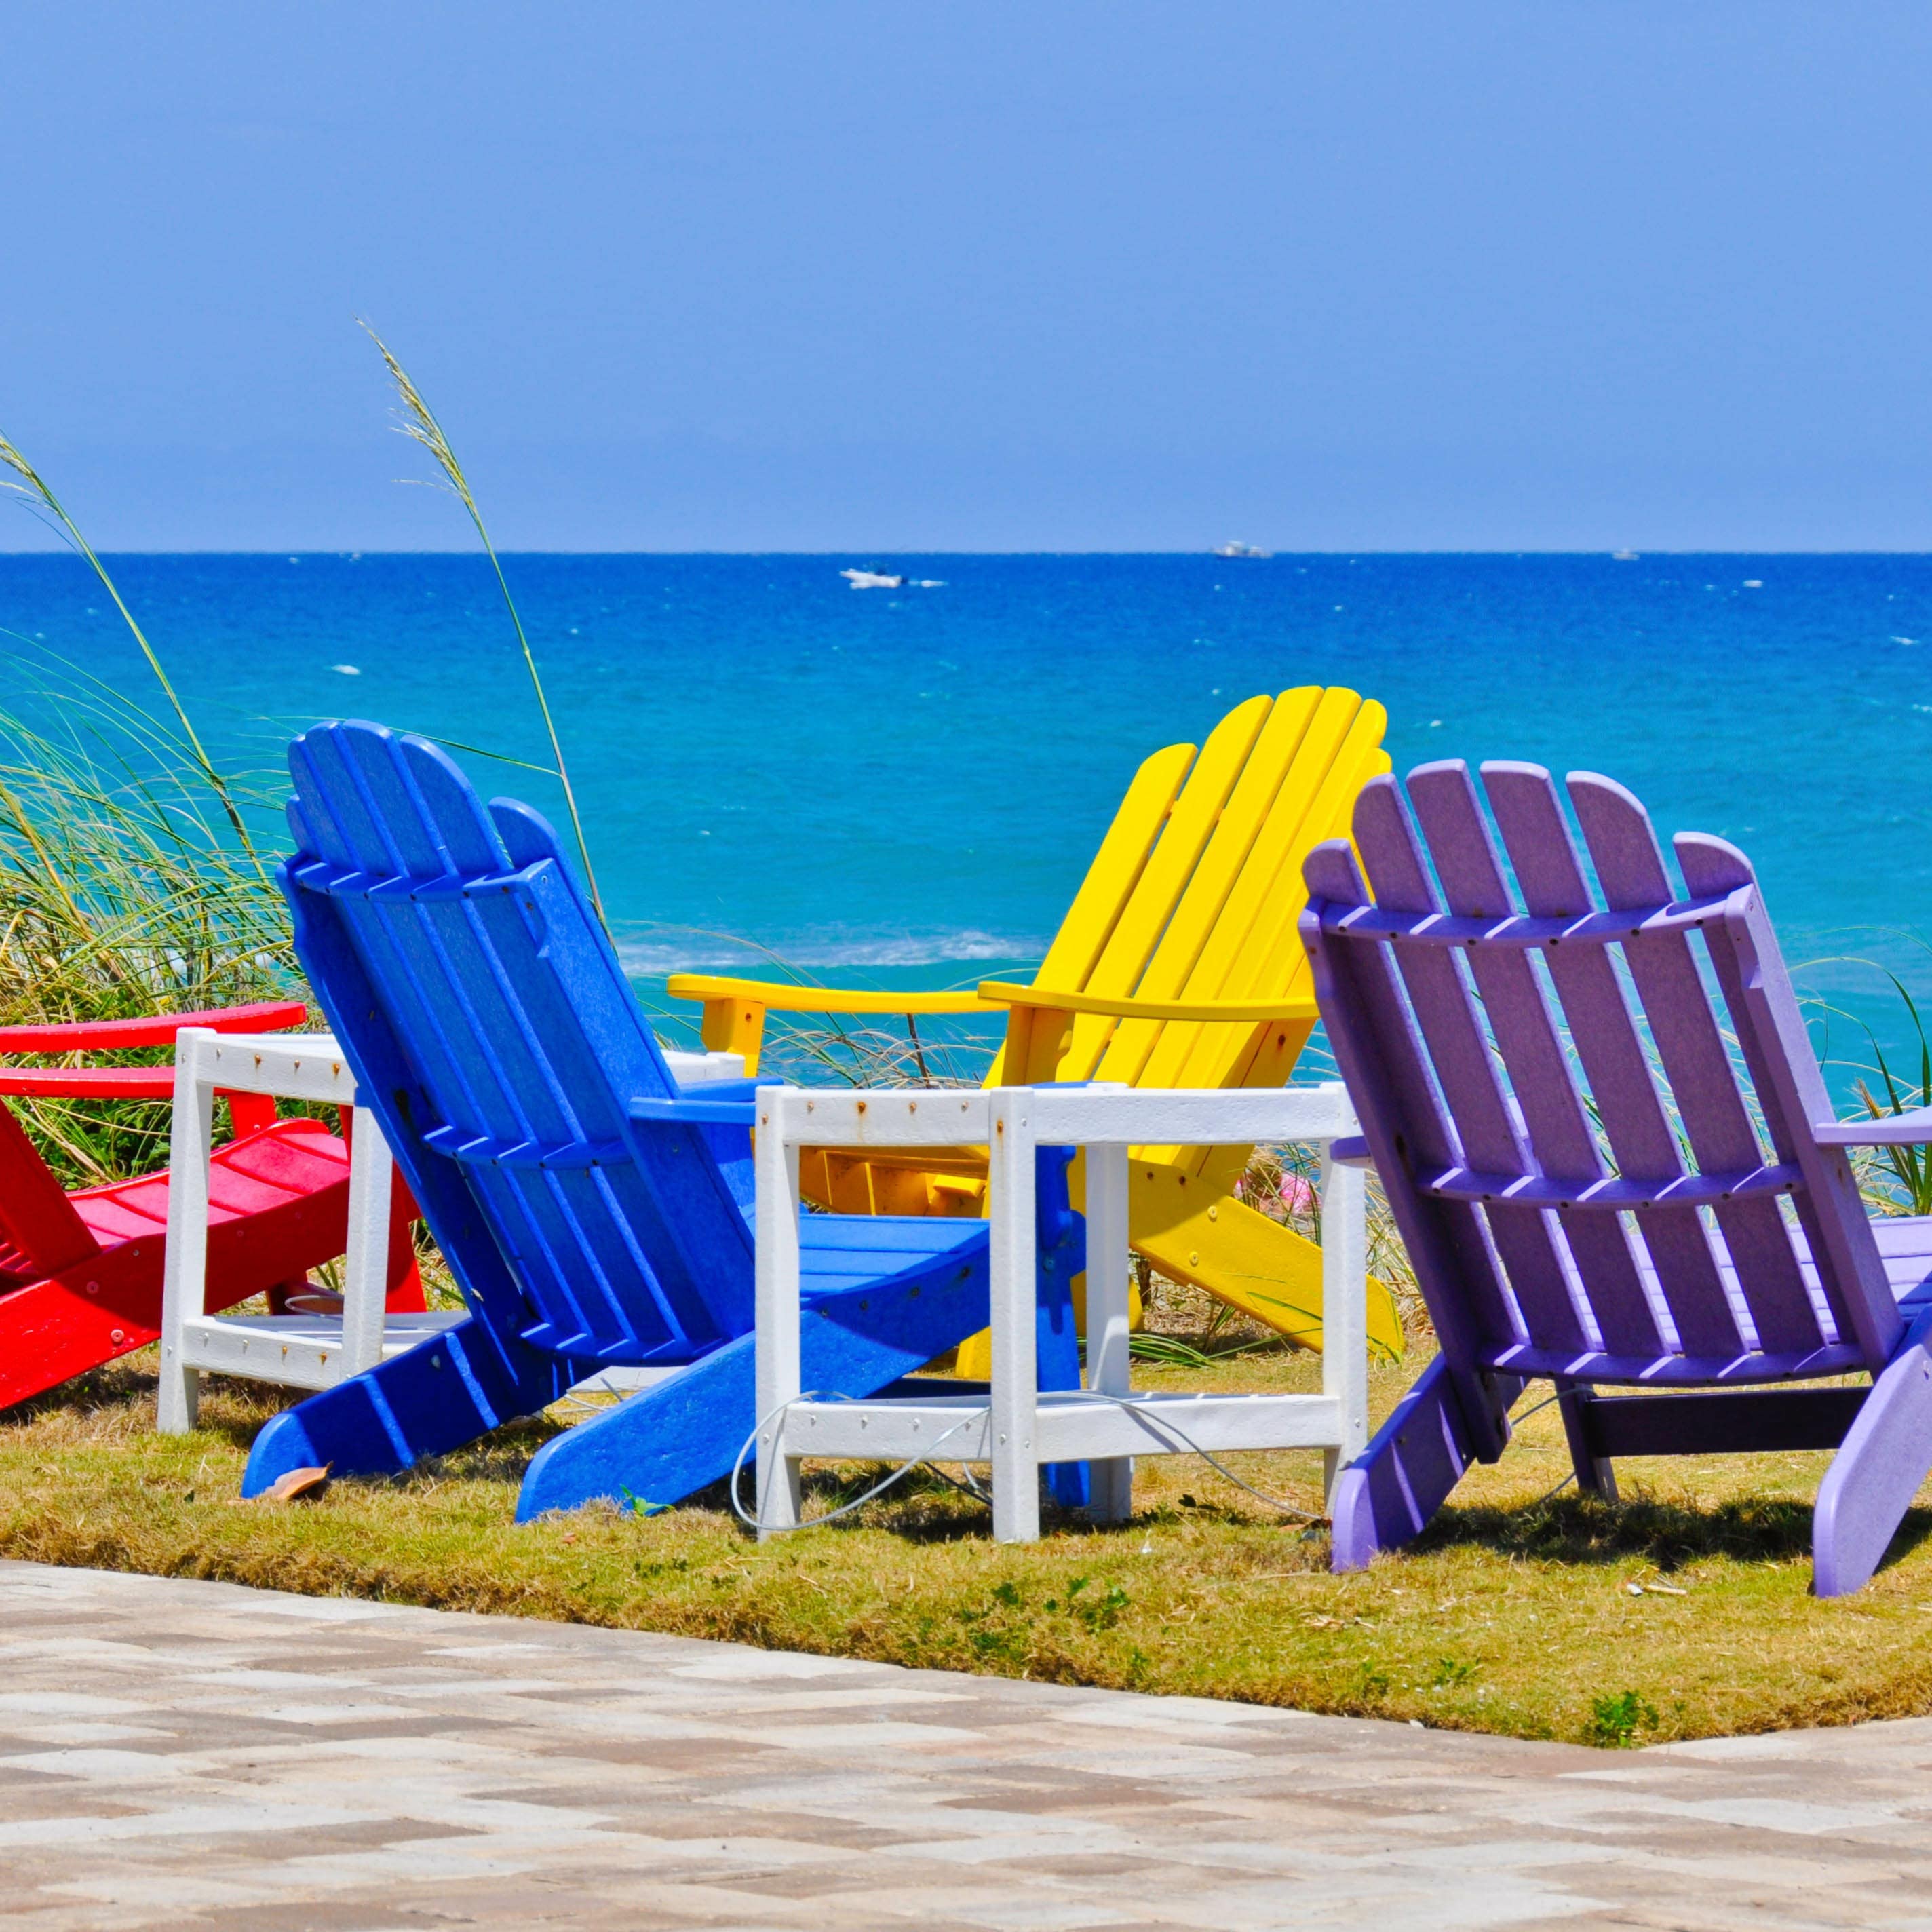 Beach chairs overlooking the ocean